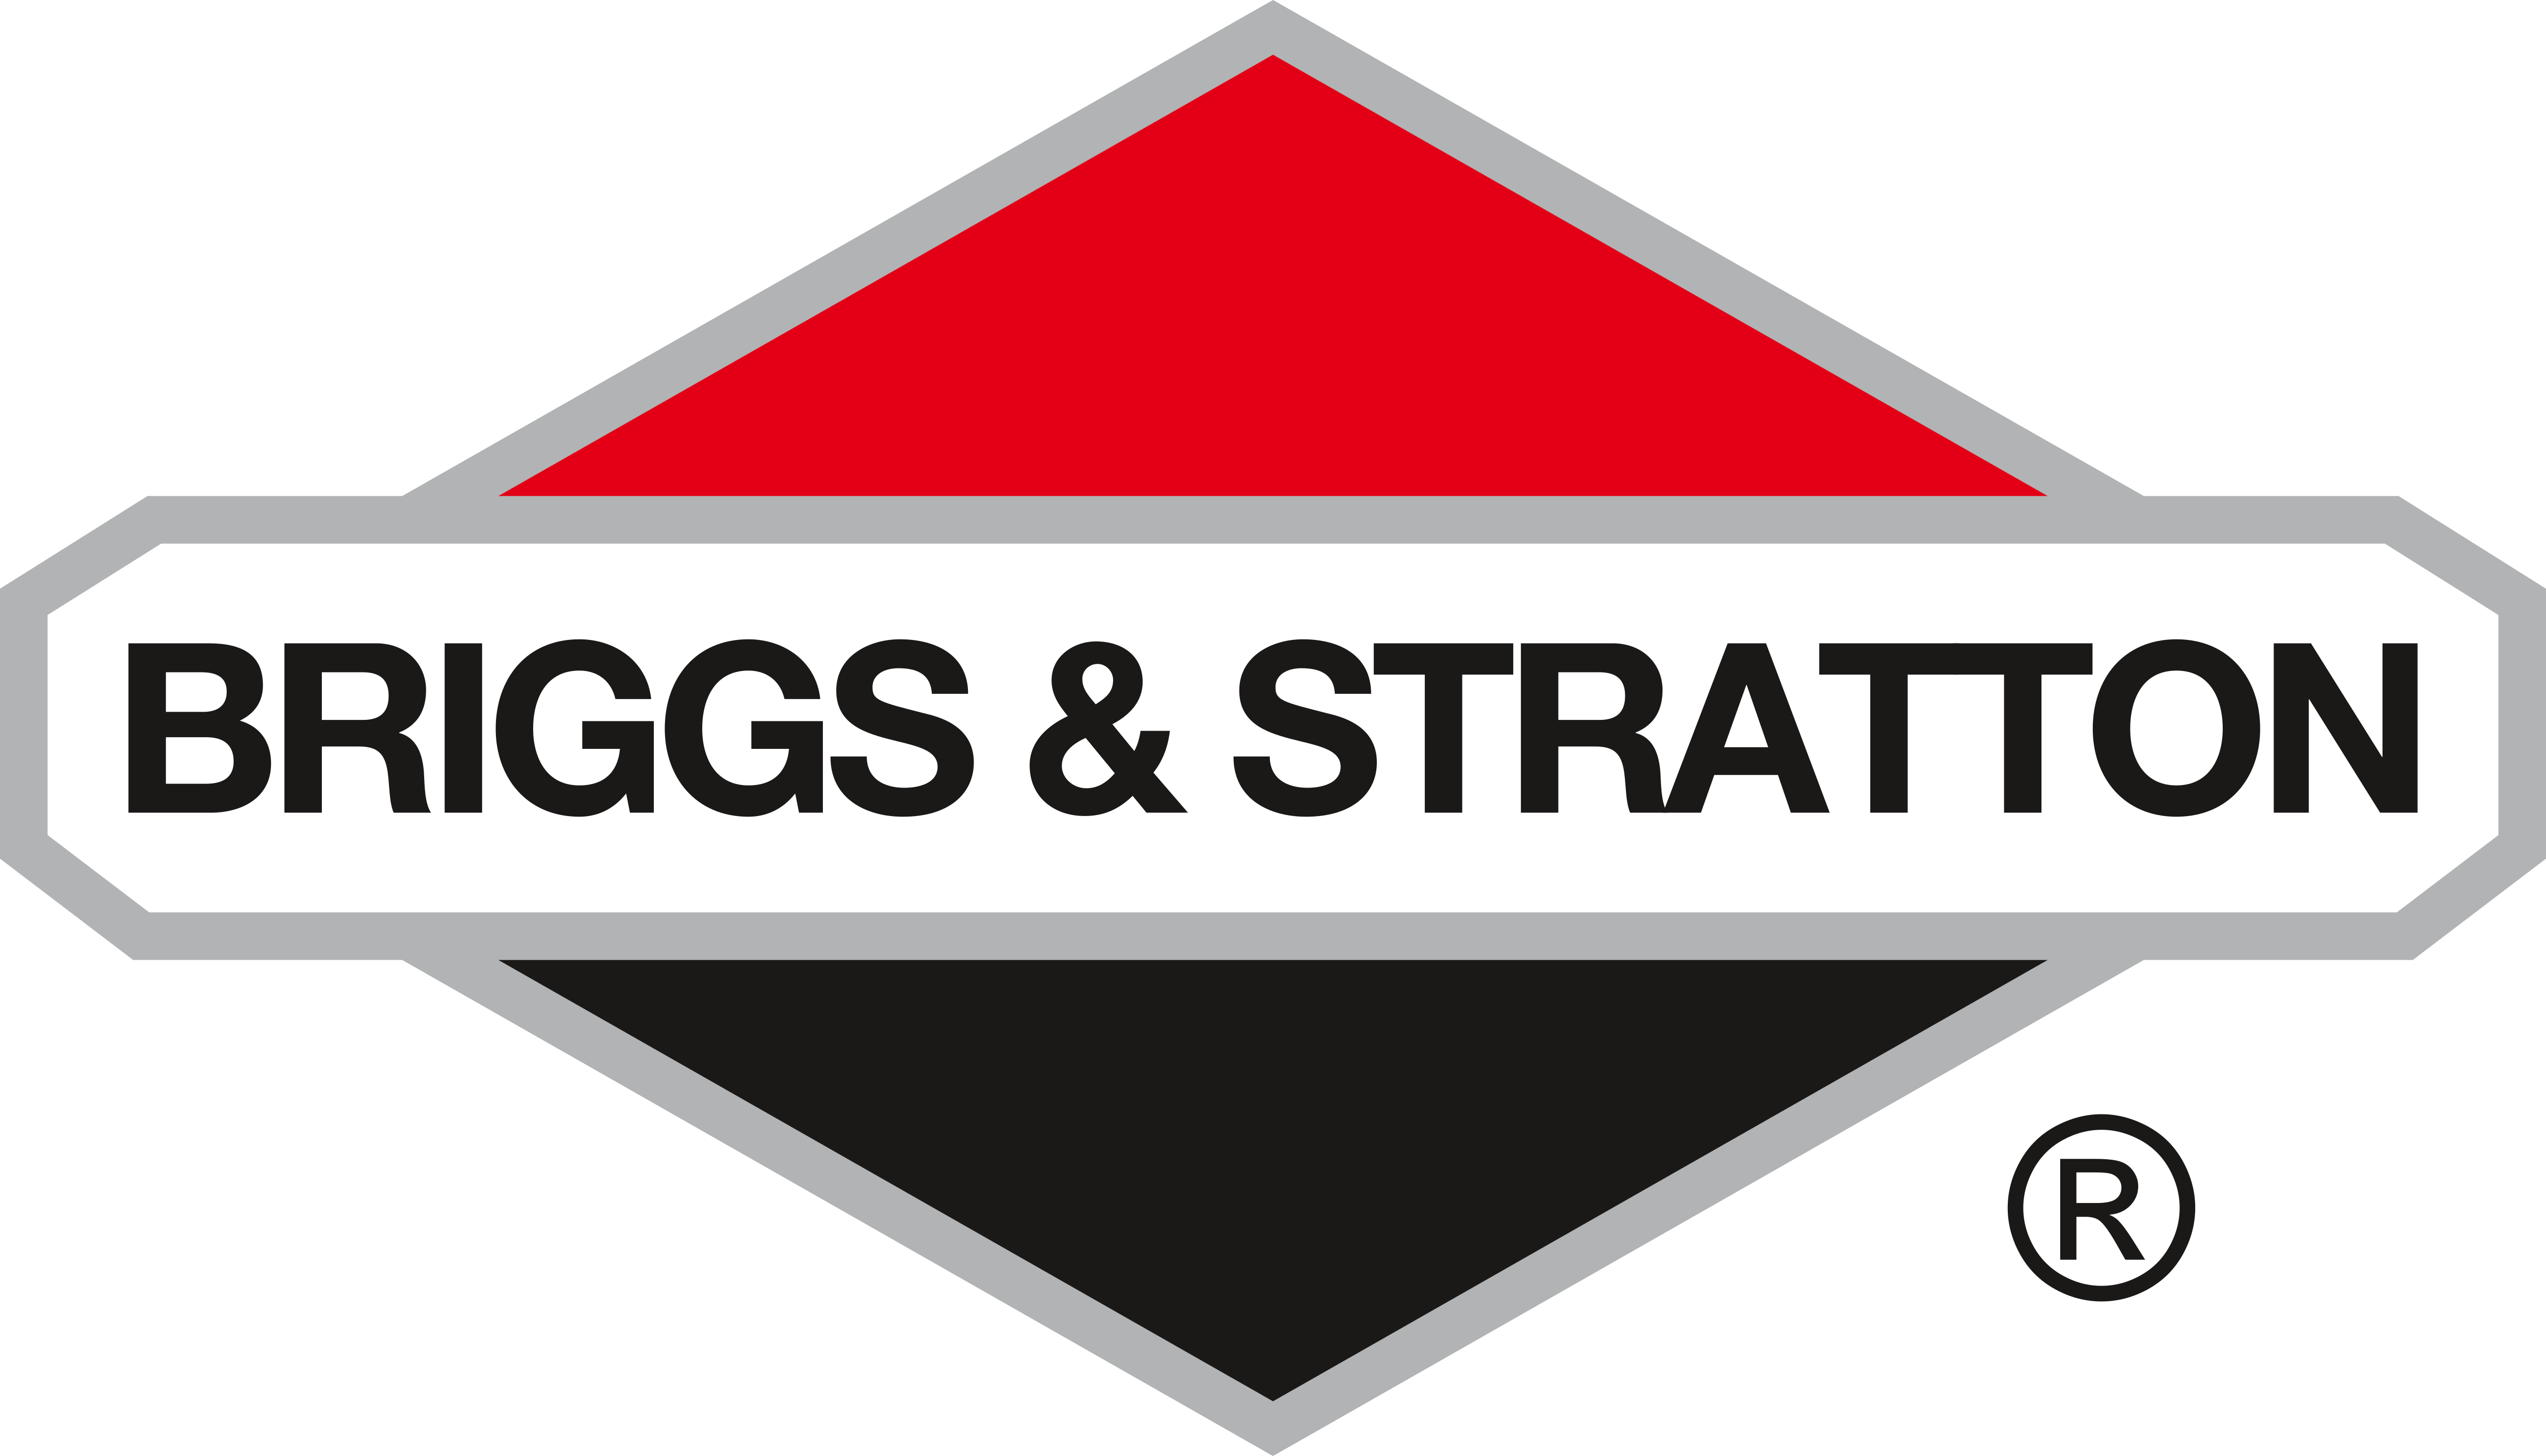 Briggs & Stratton – Logos Download